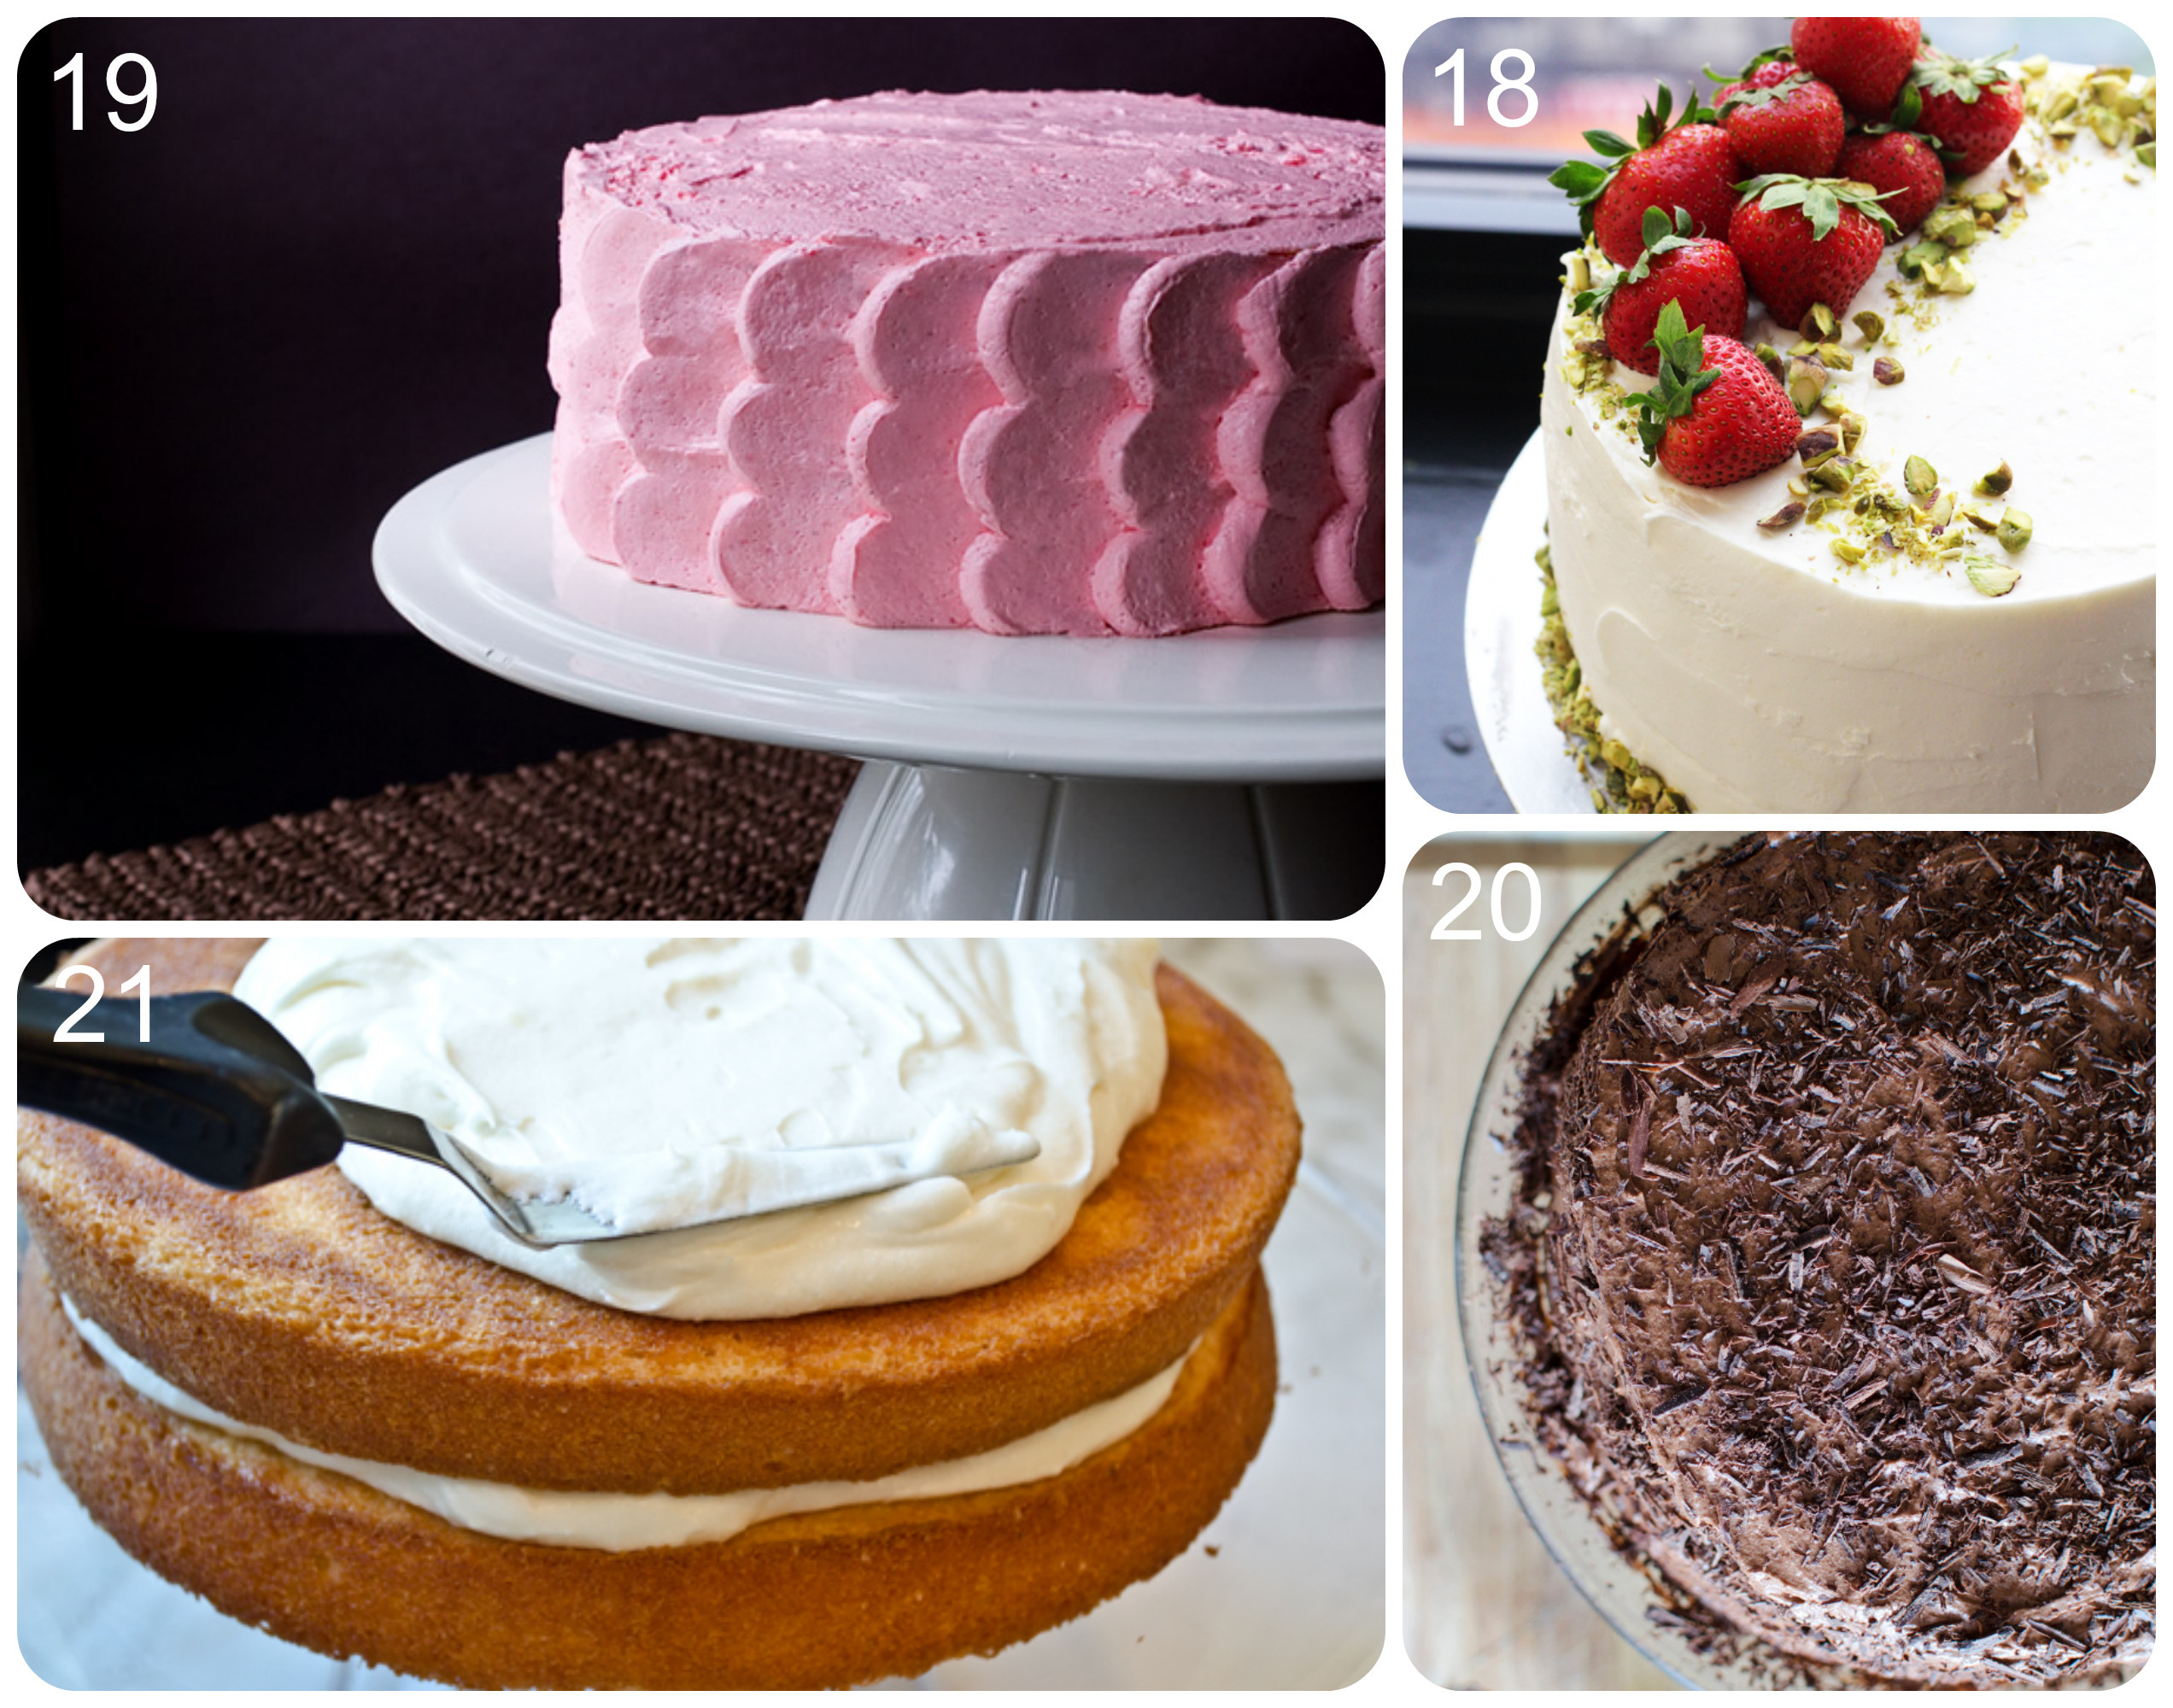 Recipes For Birthday Cake
 The Best Birthday Cake Recipes 52 Kitchen Adventures